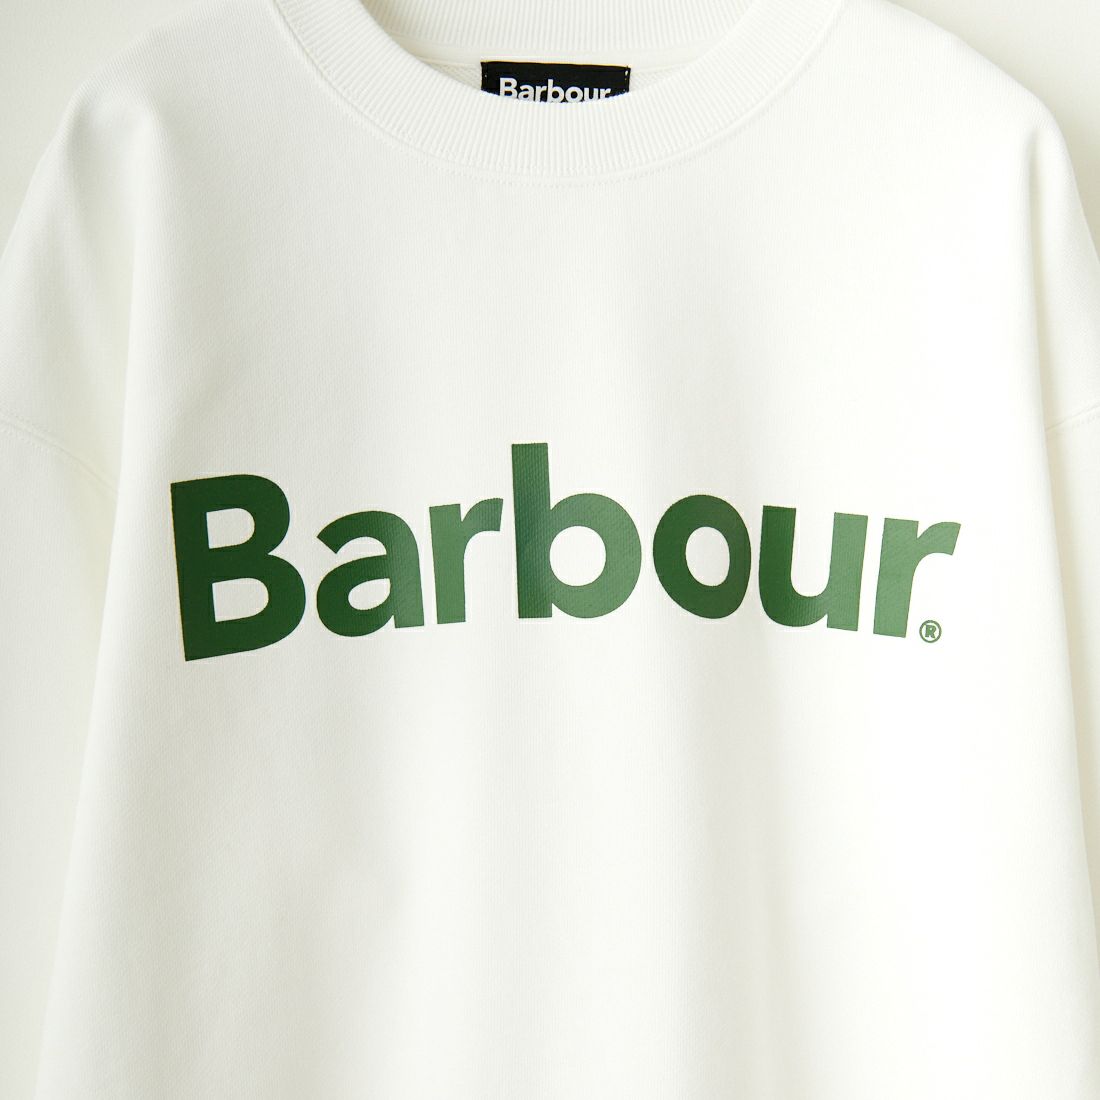 Barbour [バブアー] BARBOURロゴ クルーネックスウェット [241LOLG001] IVORY